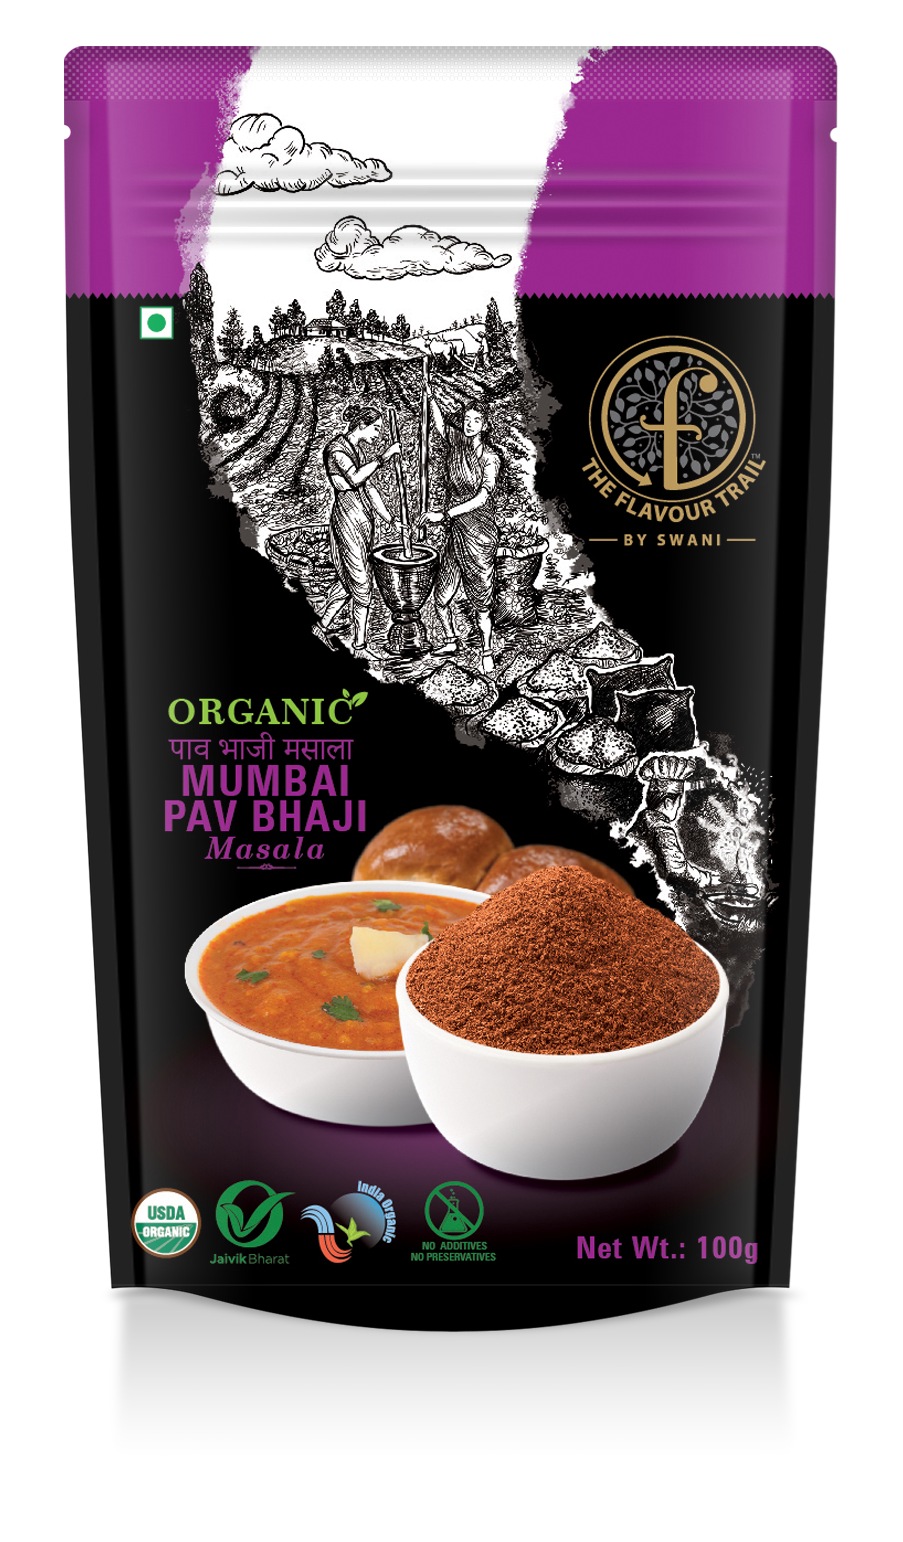 Flavortrail Mumbai Pav Bhaji Masala